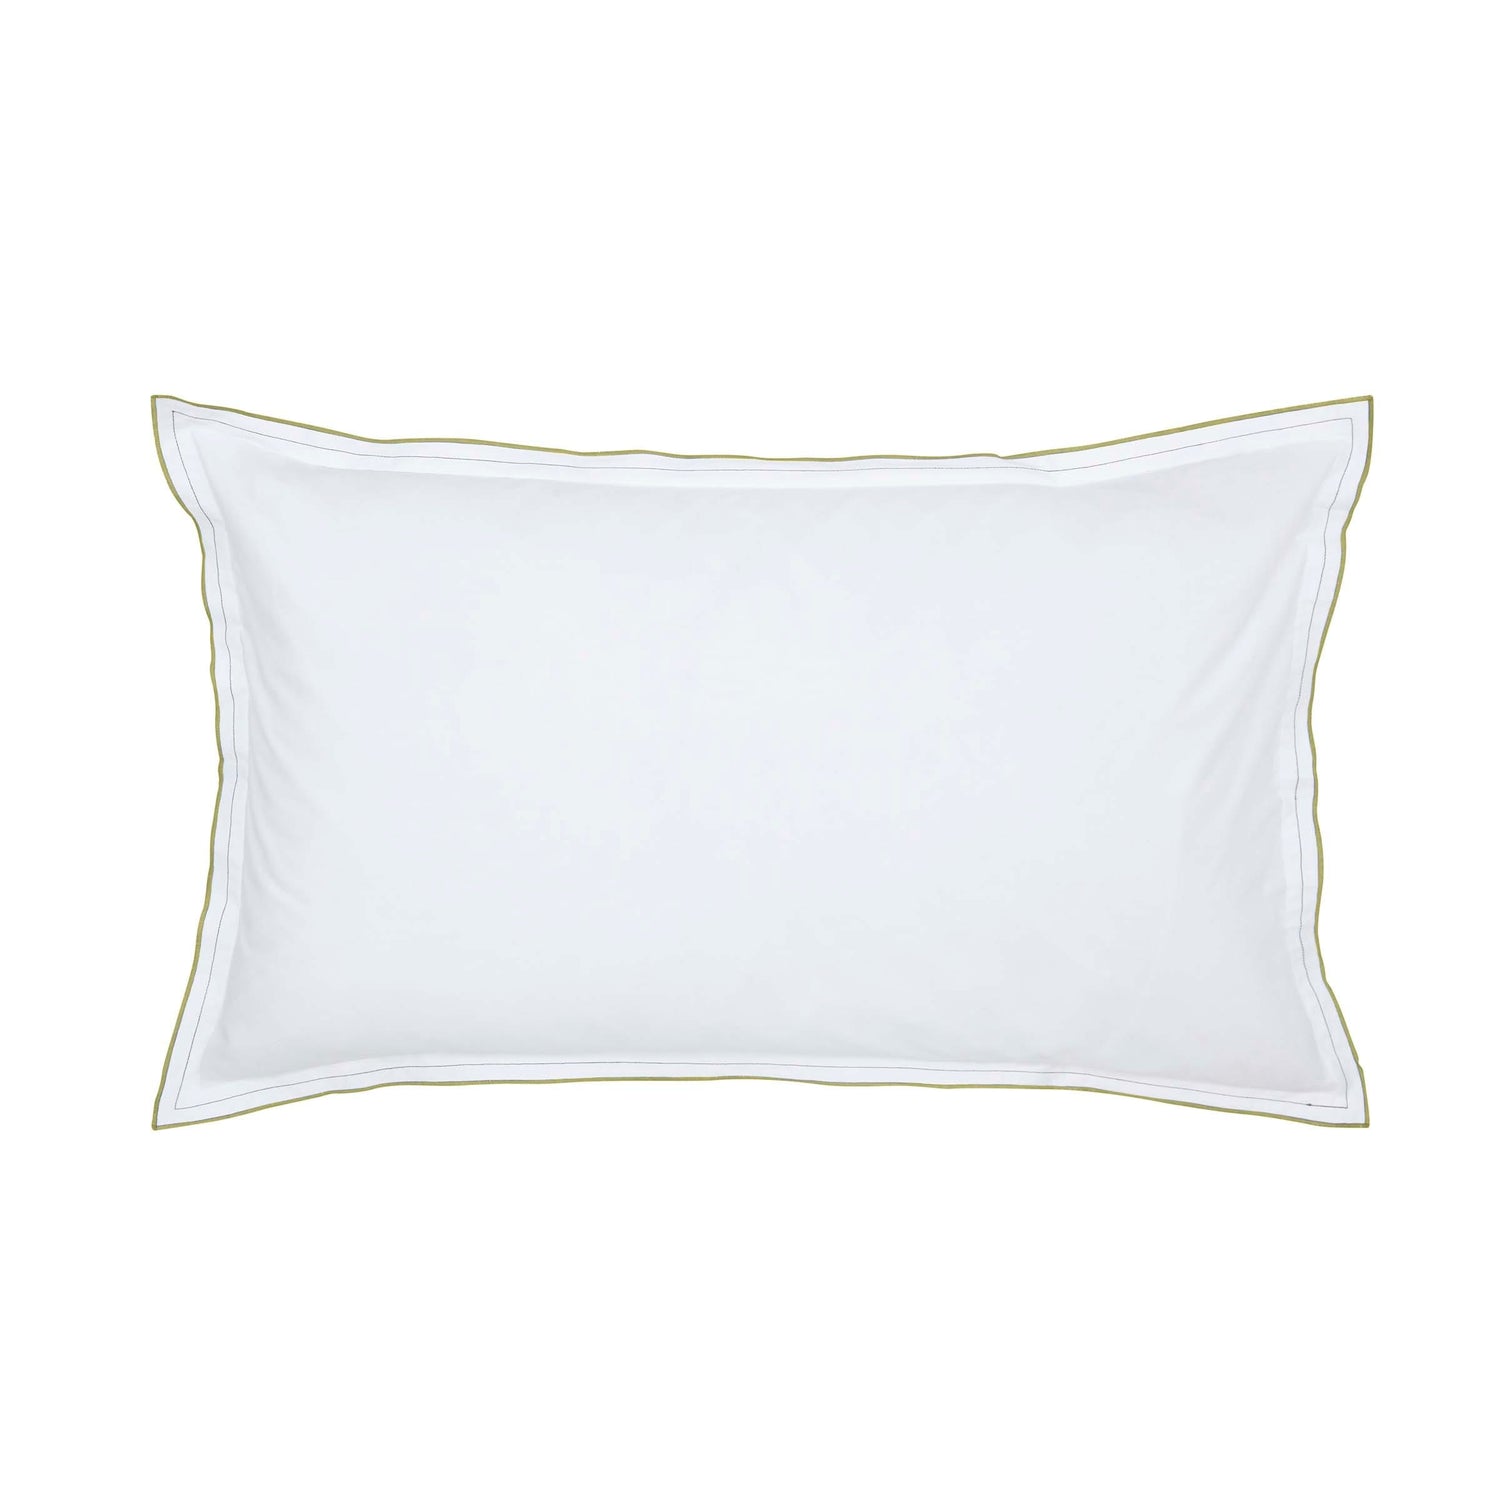 White Murmur Oxford Pillowcase with Green Edging